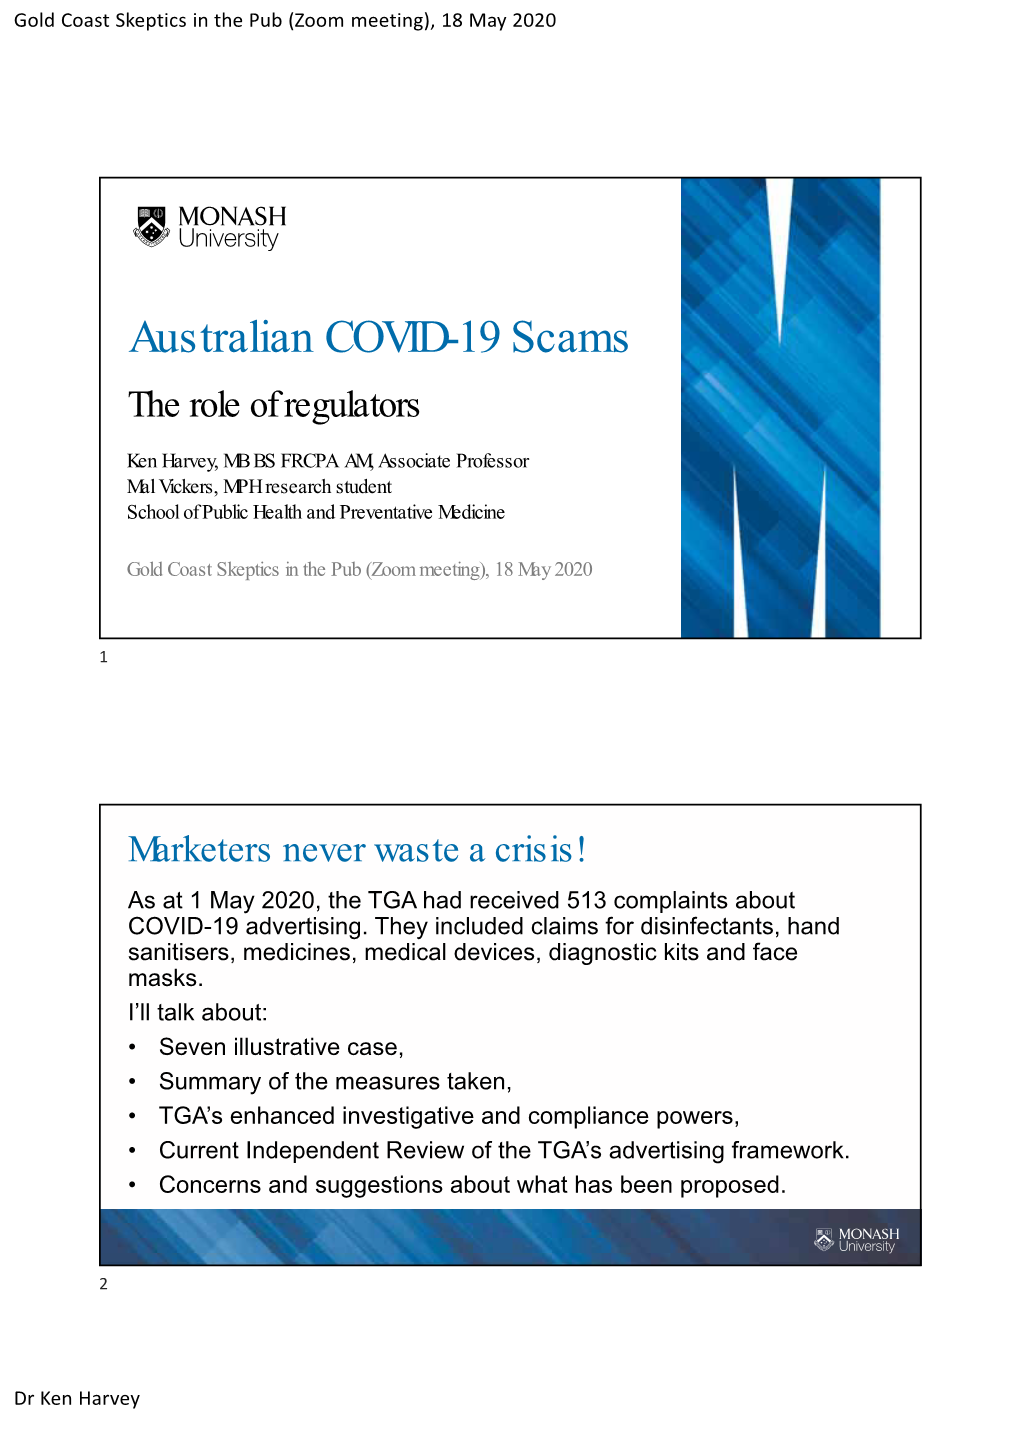 Australian COVID-19 Scams the Role of Regulators